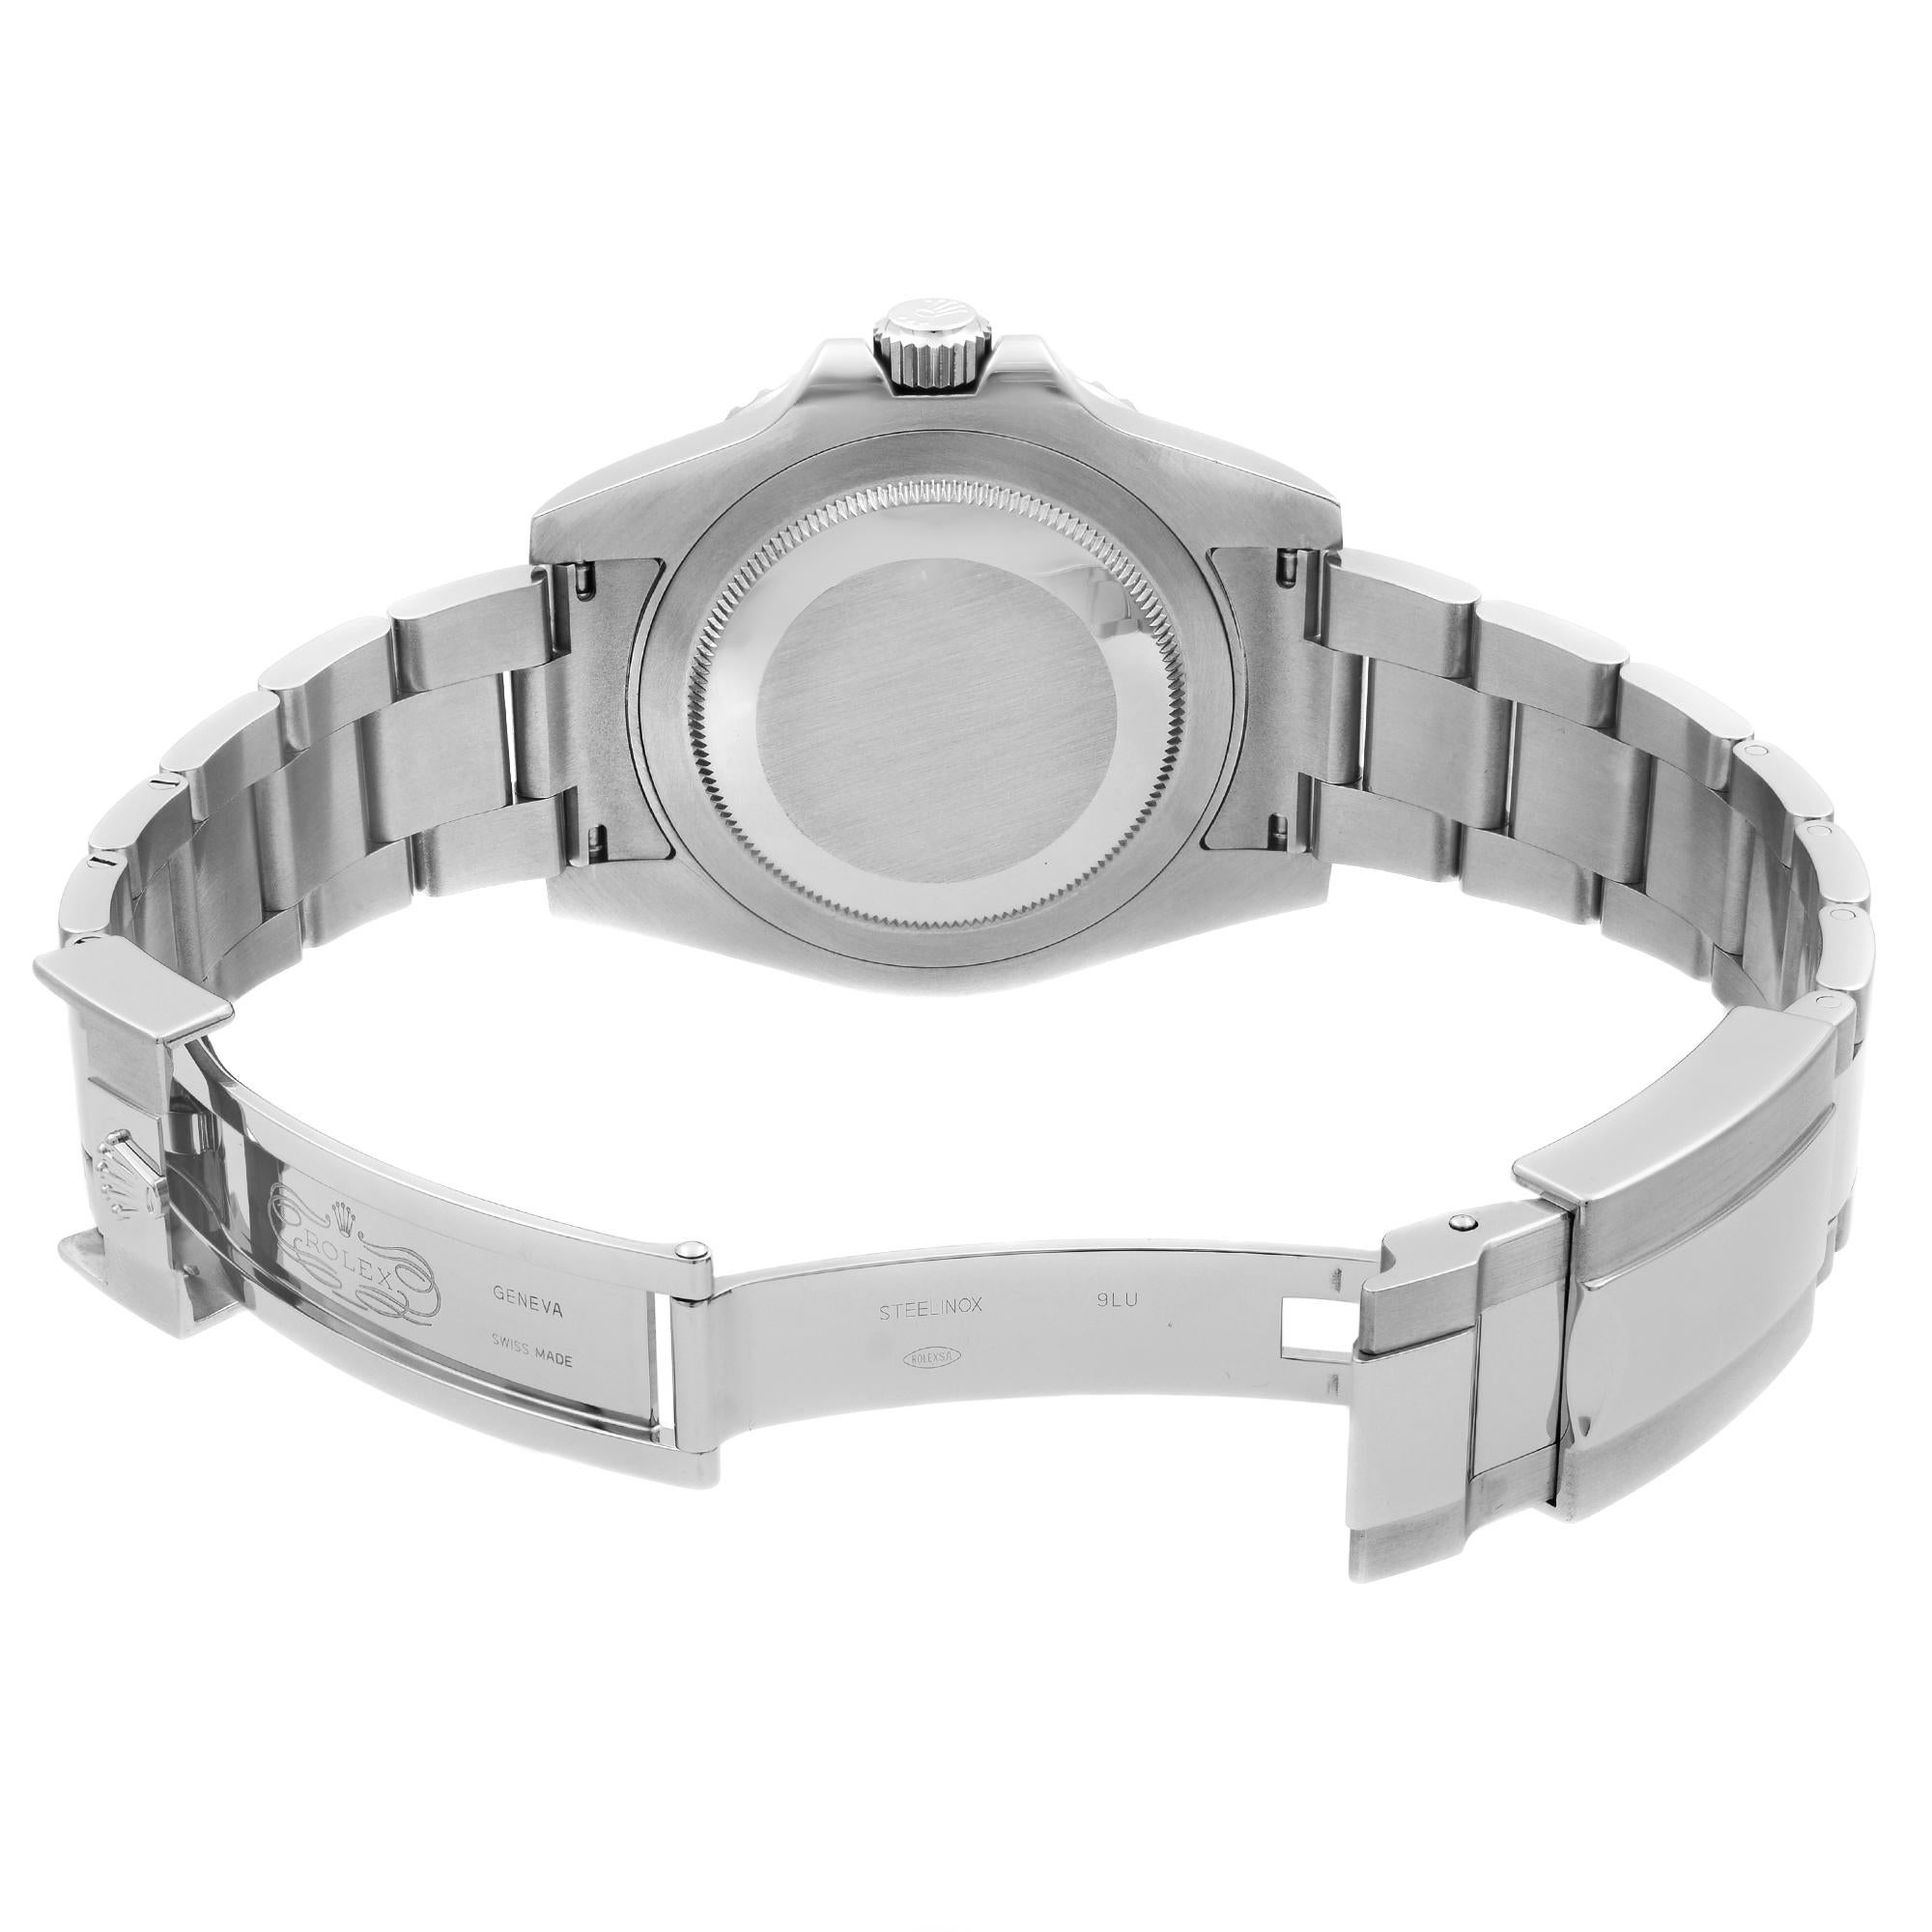 Rolex GMT-Master II Steel Black Dial Green Hand Automatic Men's Watch 116710LN 2